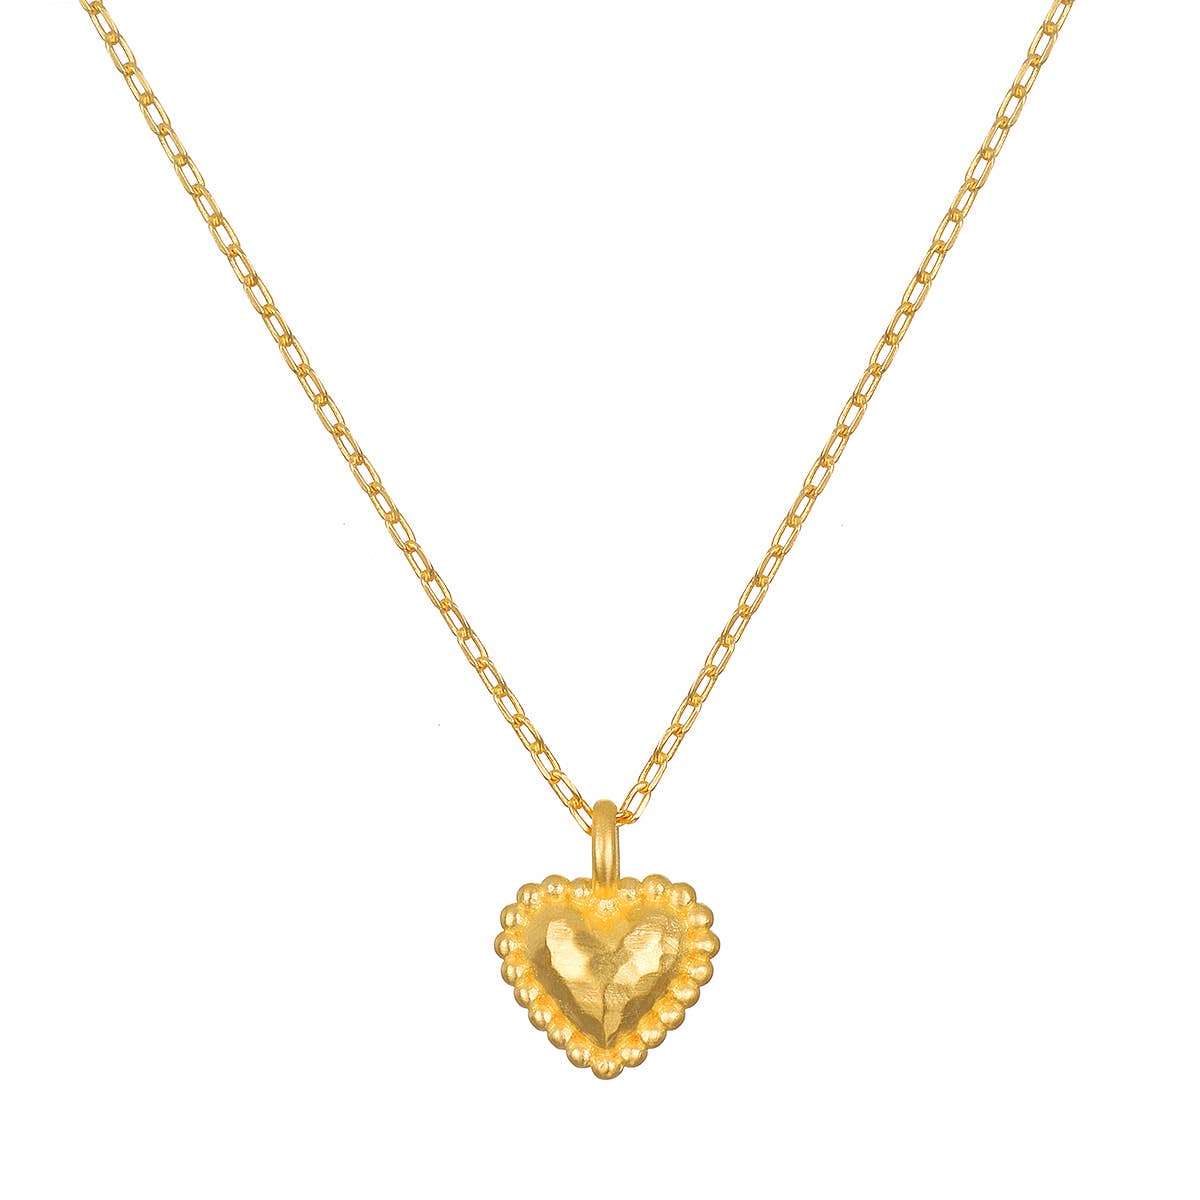 Hammered Dot Heart Pendant Necklace - Abigail Fox Designs